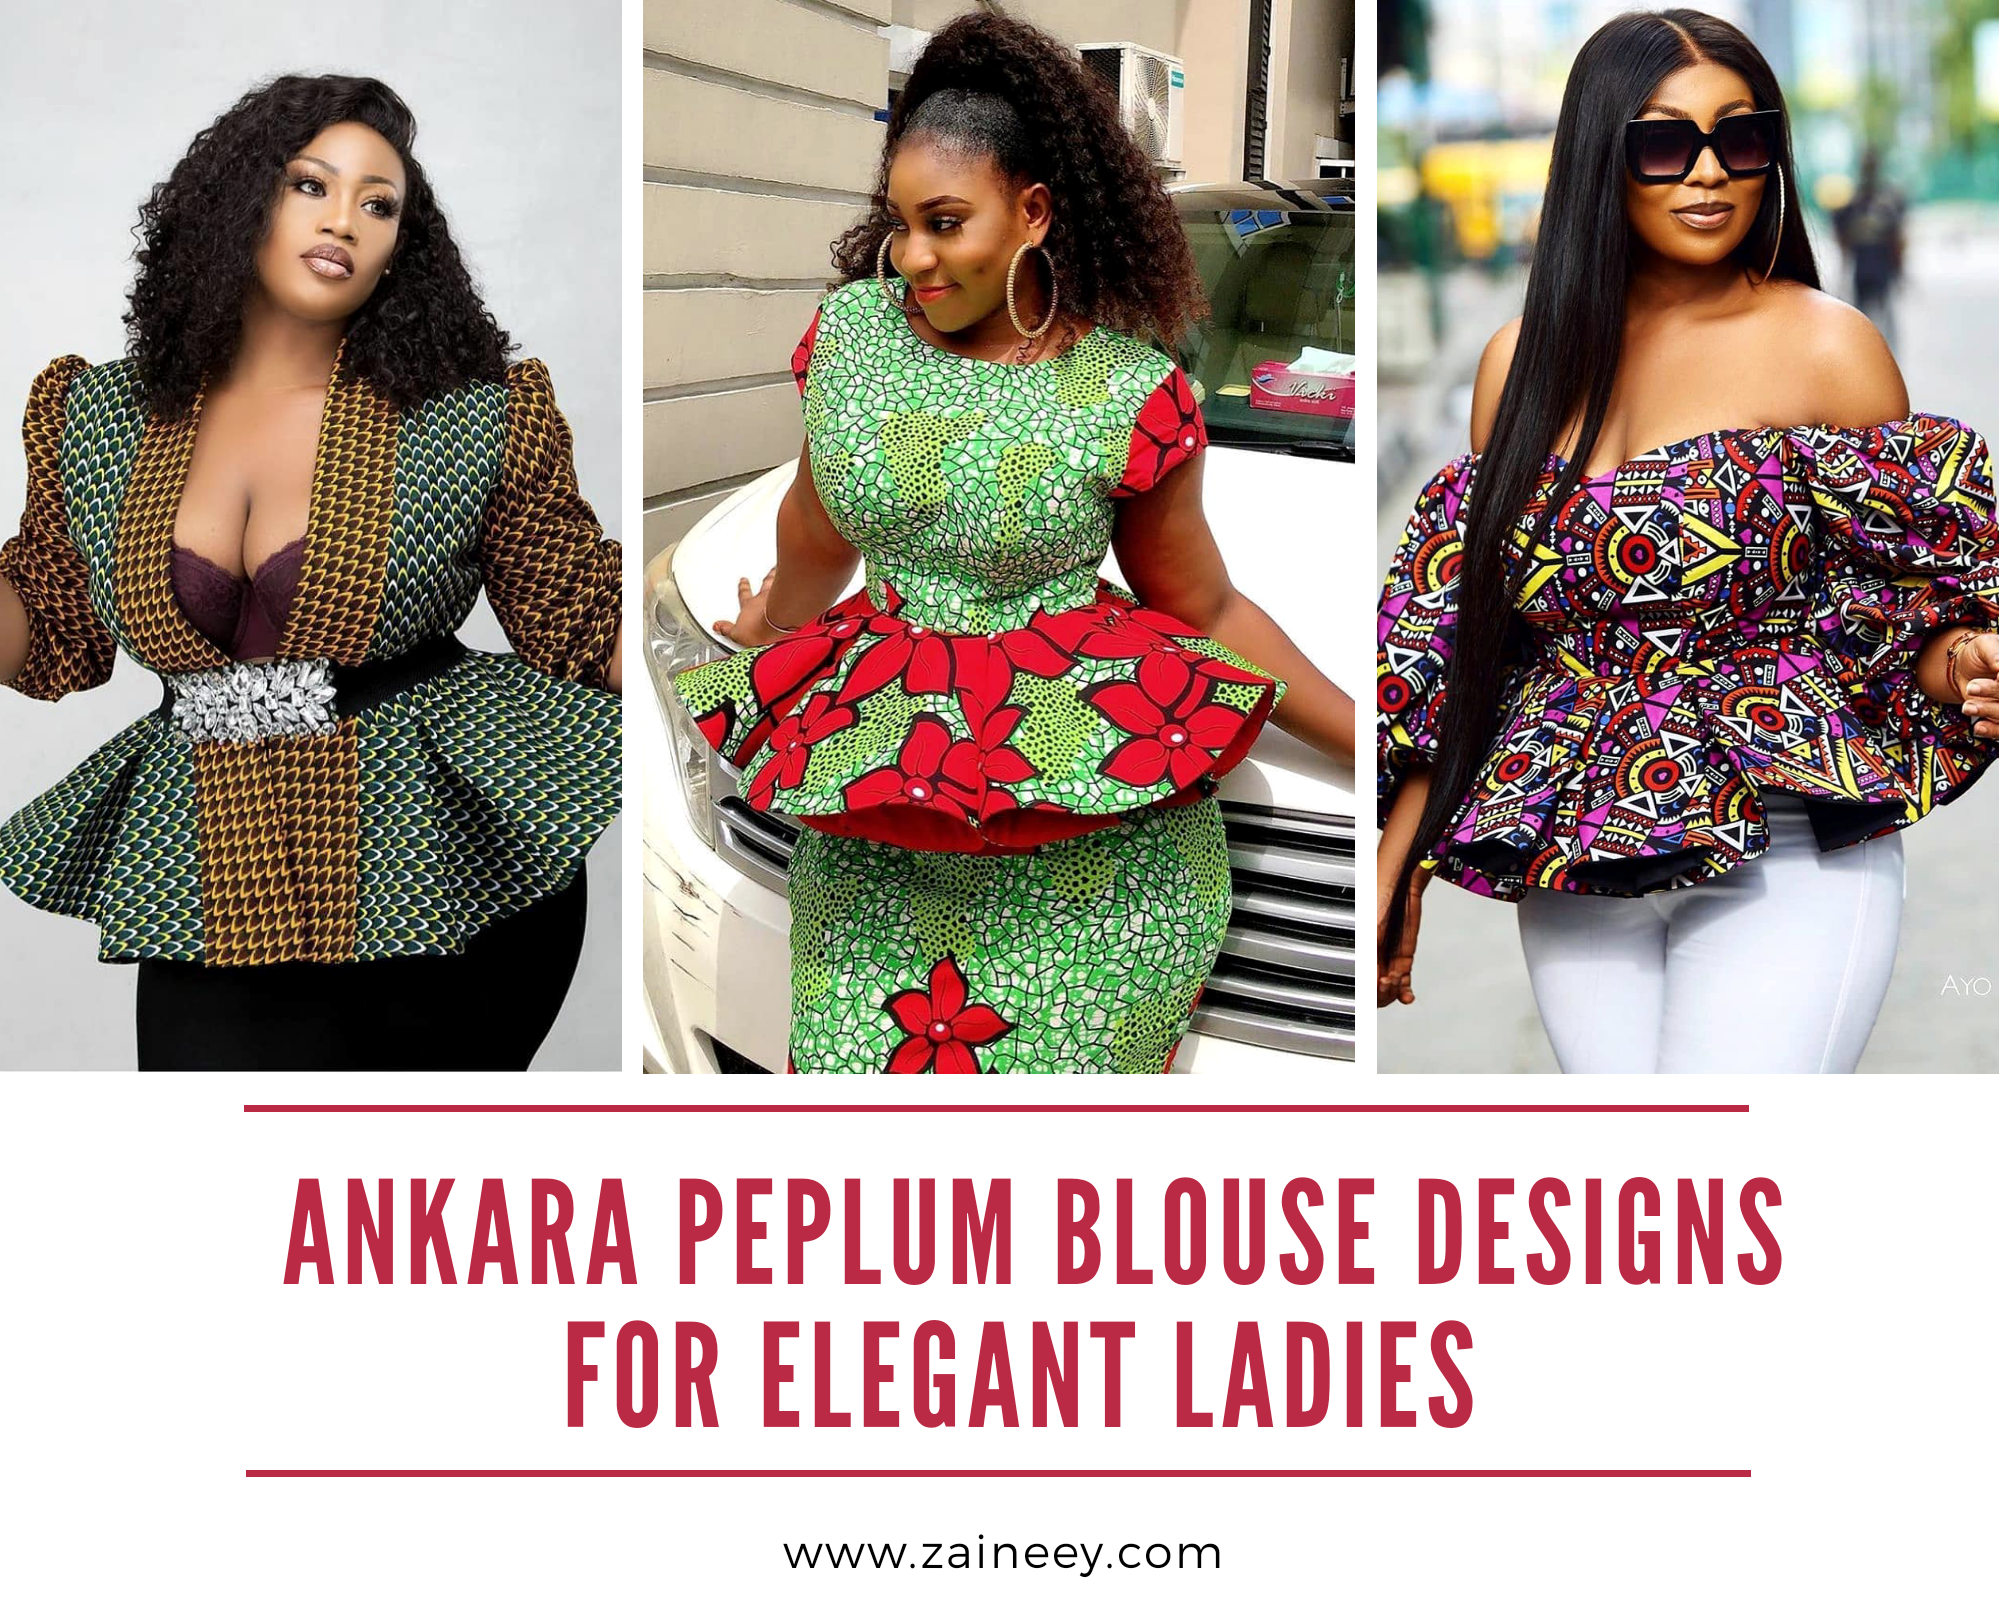 Ankara peplum blouse designs for Elegant 